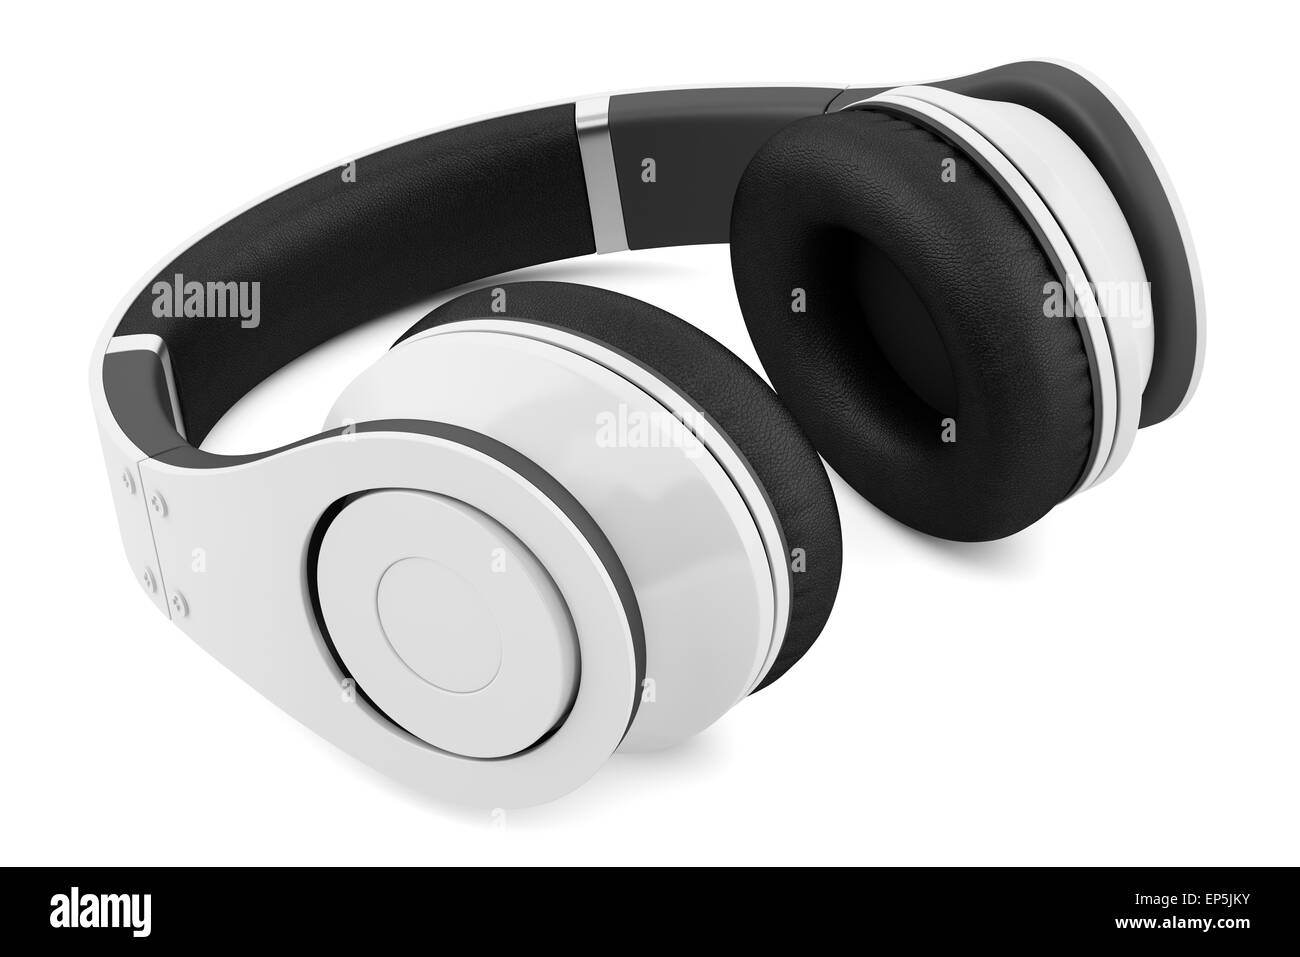 white and black wireless headphones isolated Stock Photo